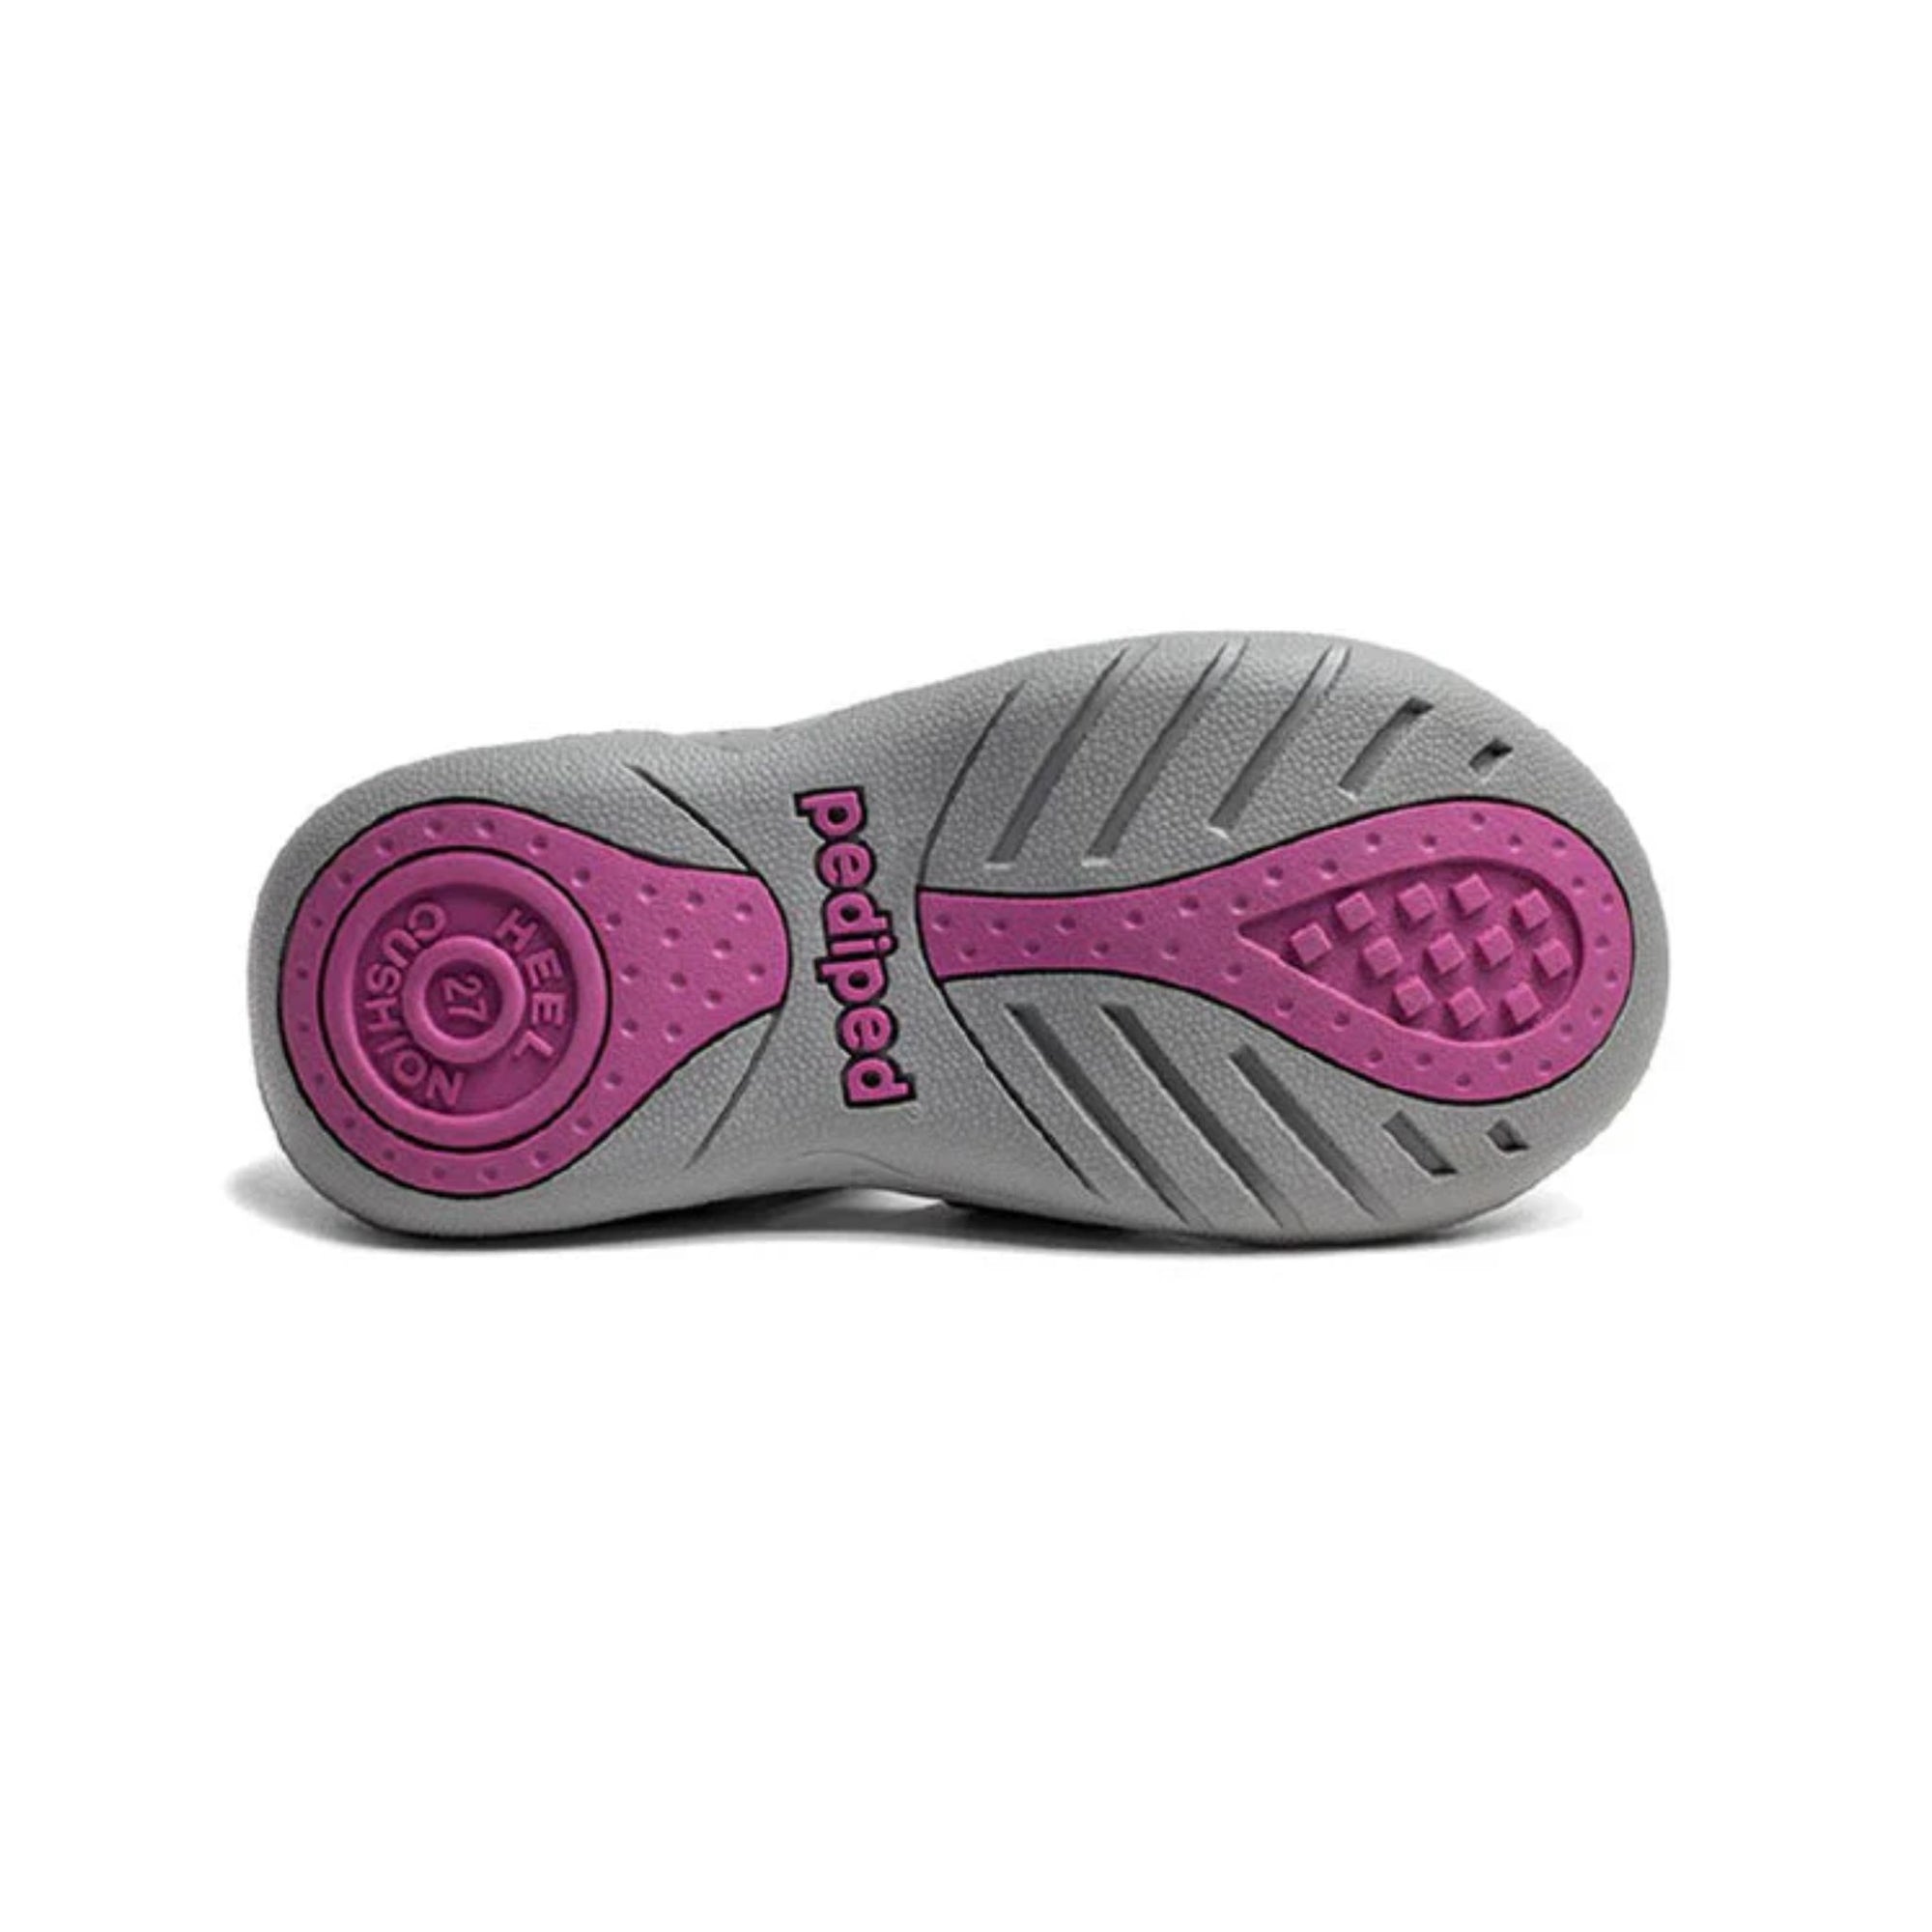 Pediped Flex Sahara Navy Pink Adventure Sandals